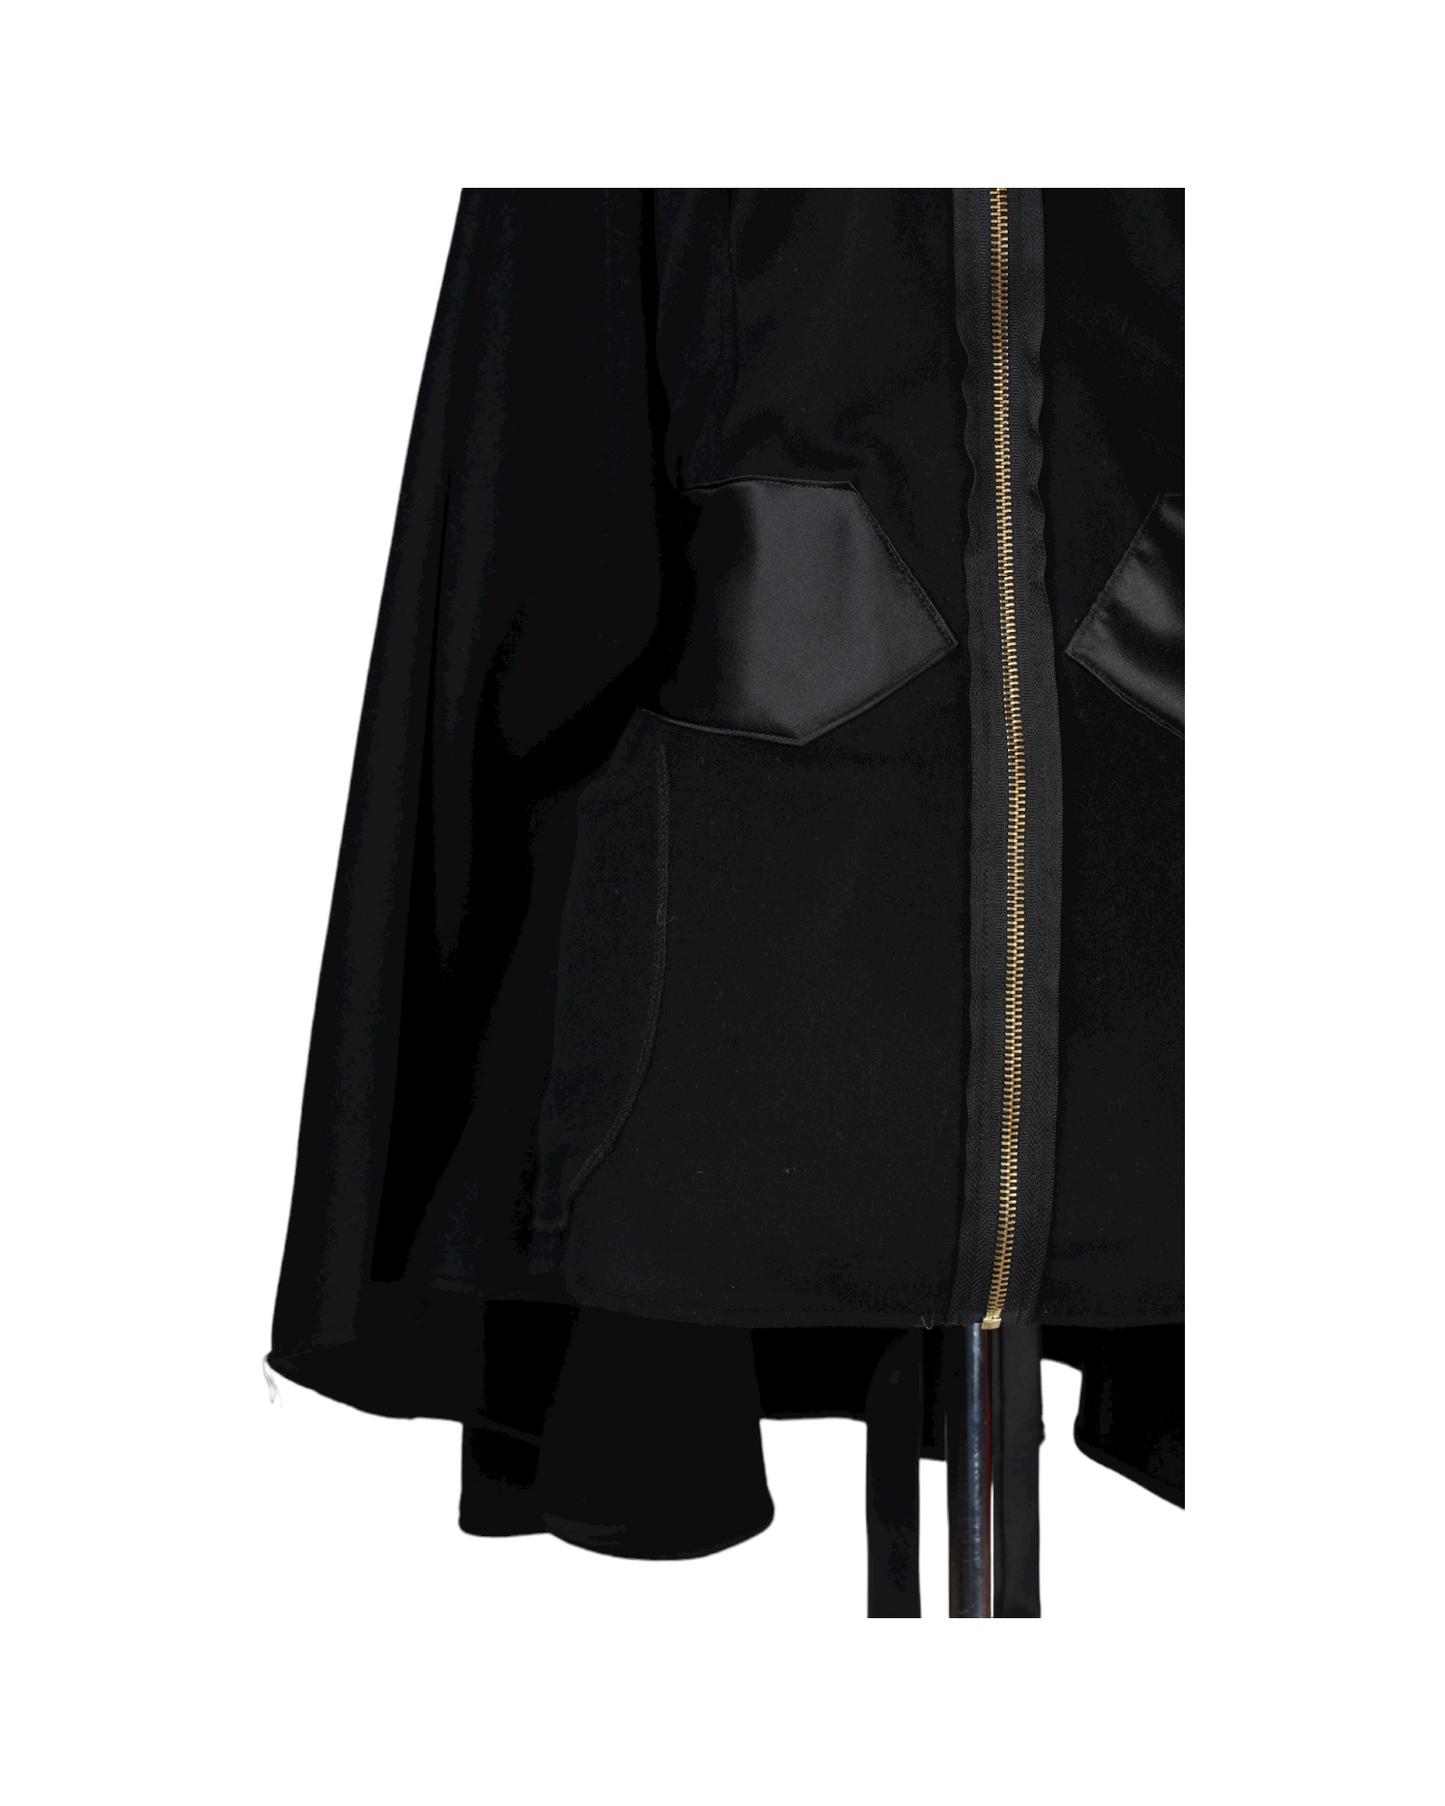 Sohung Designs Black Jacket